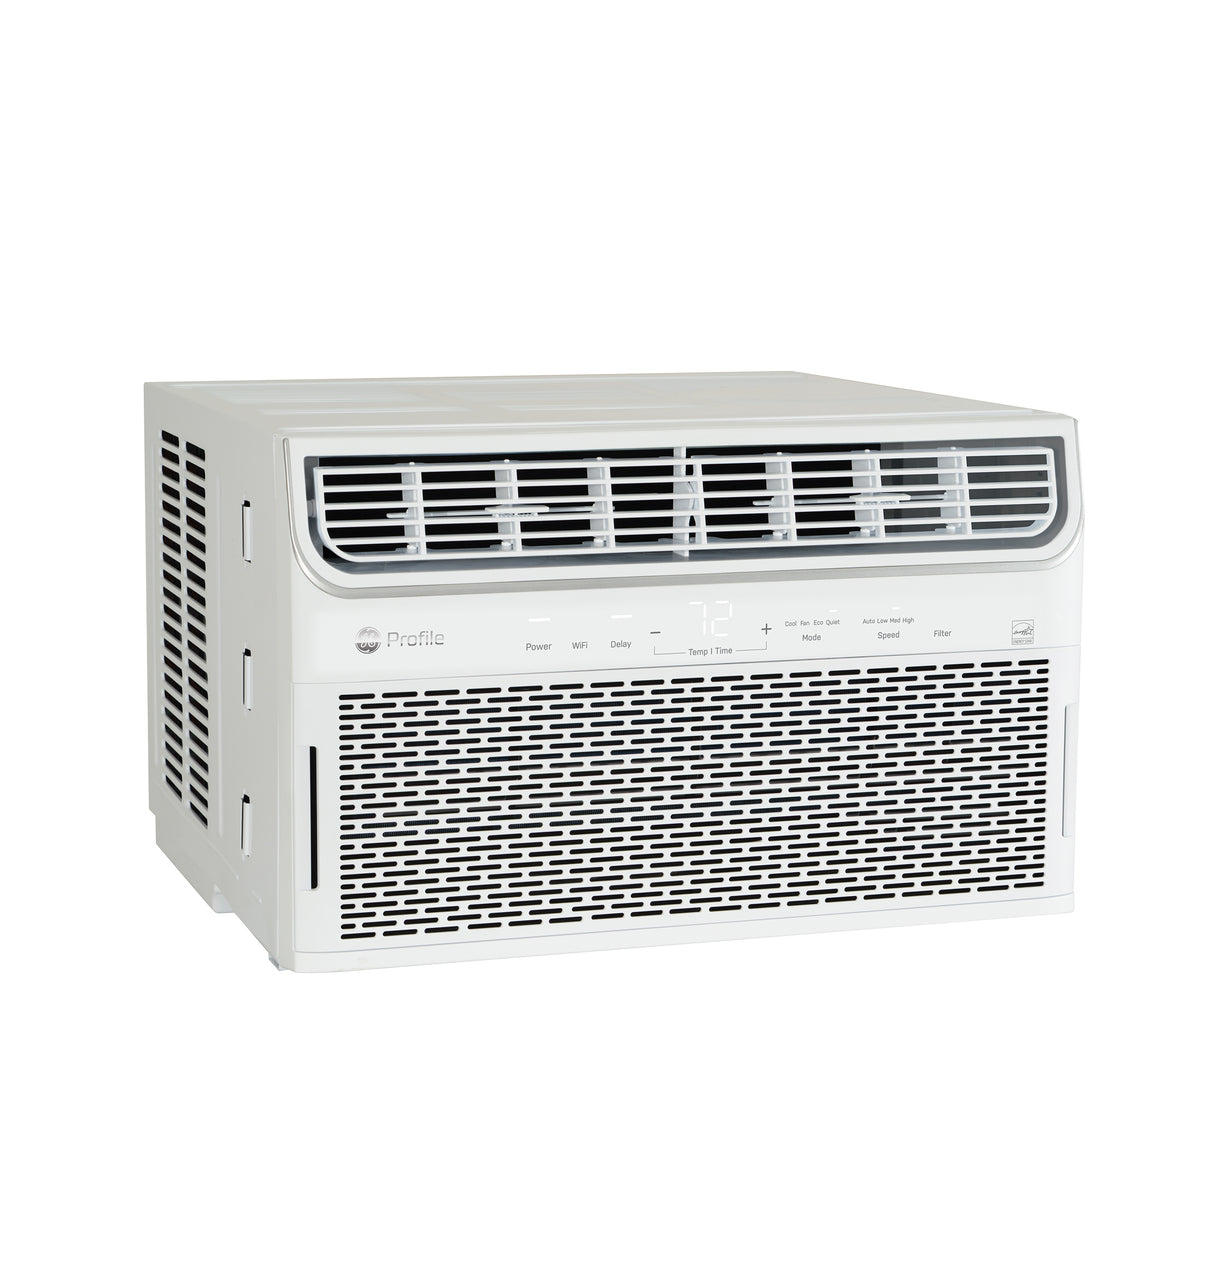 GE Profile(TM) ENERGY STAR(R) 10,100 BTU Inverter Smart Ultra Quiet Window Air Conditioner for Medium Rooms up to 450 sq. ft. - (AHTR10AC)